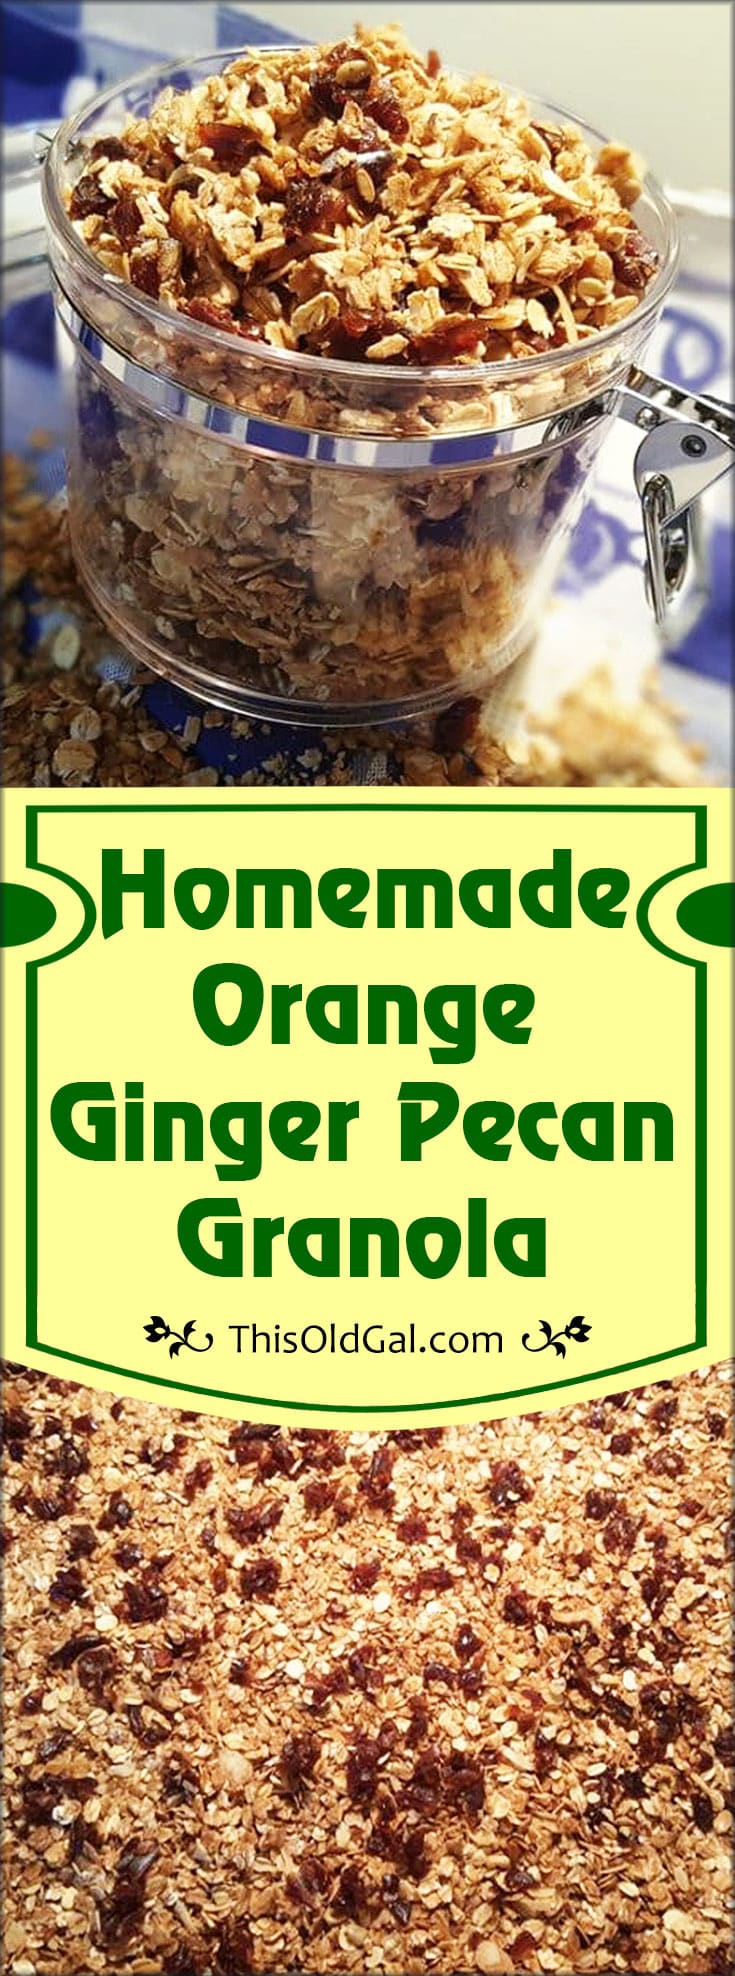 Homemade Orange Ginger Pecan Granola